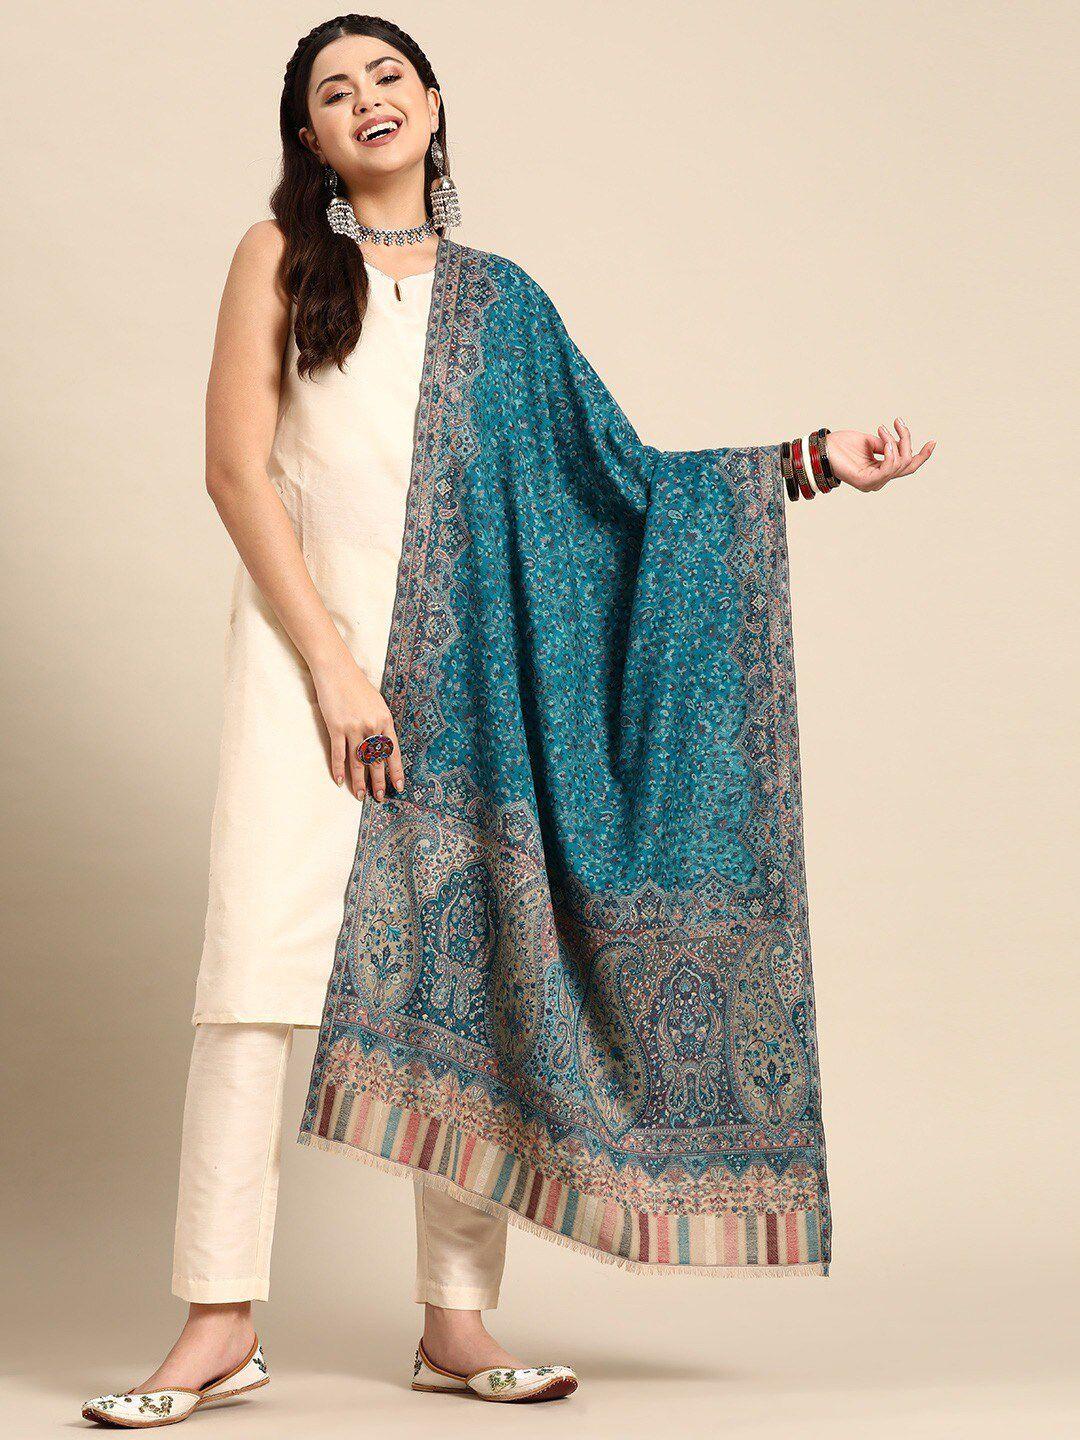 sangria woven design fringed border shawl